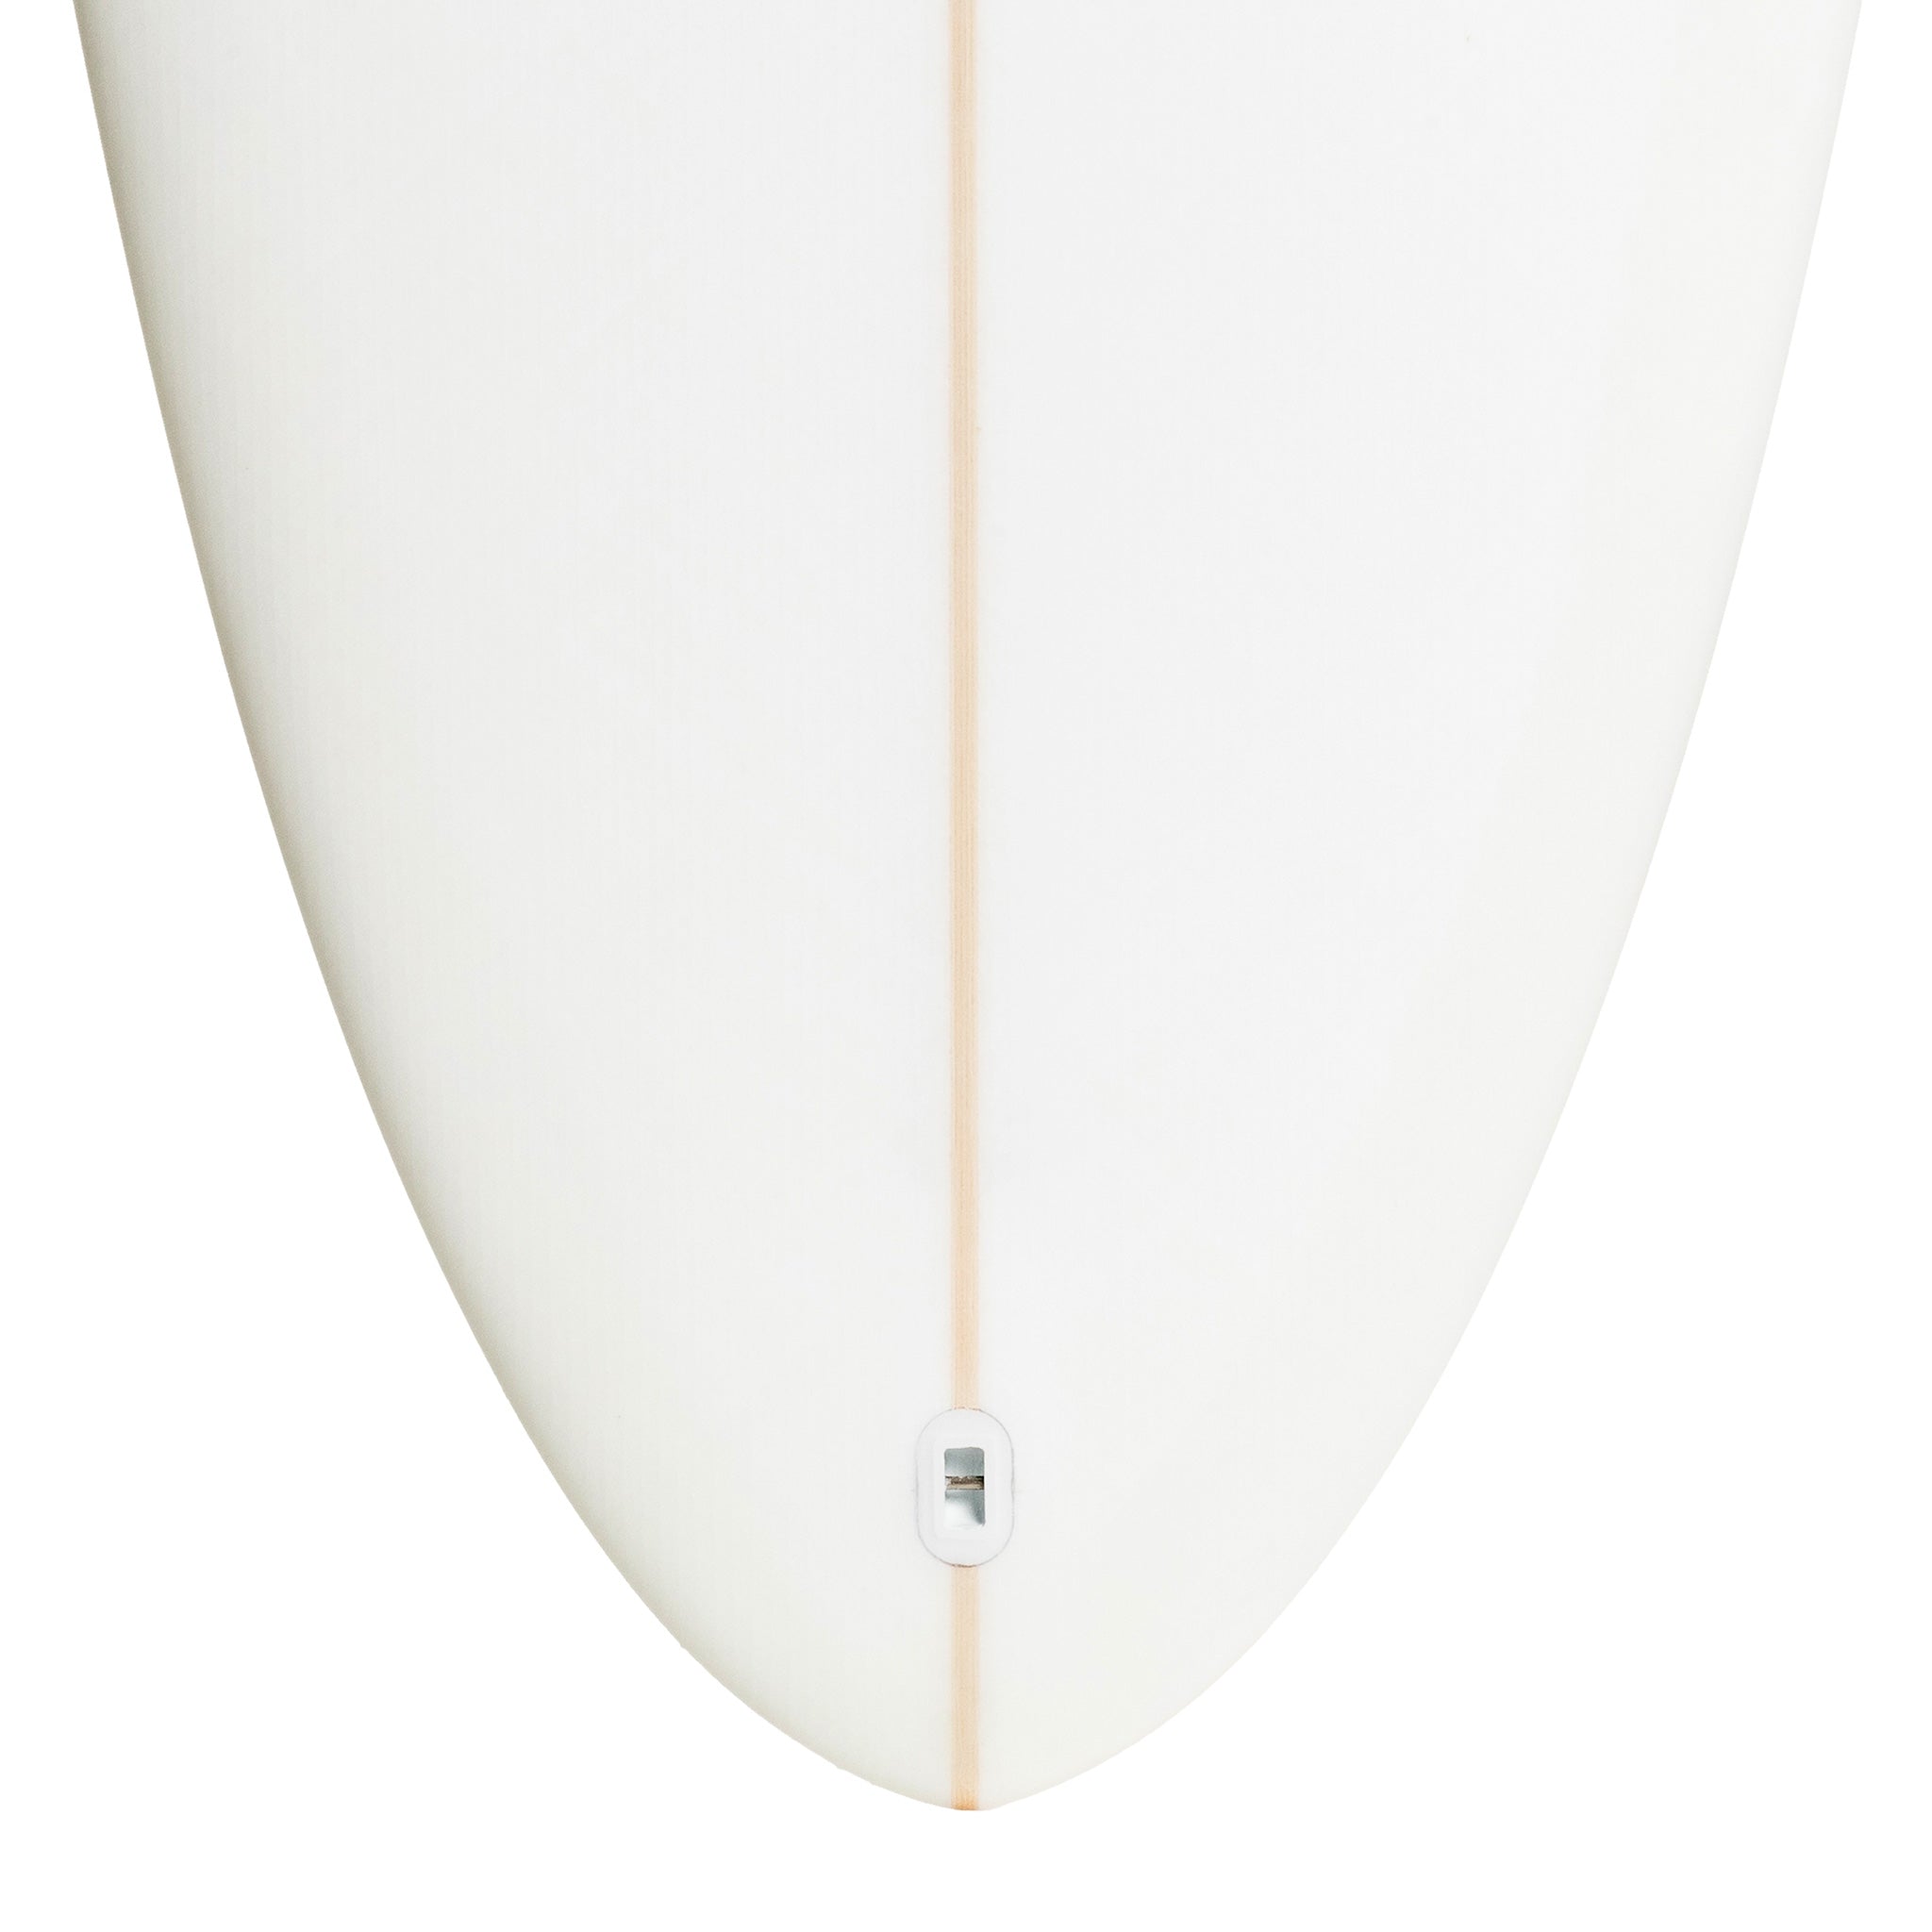 Quiksilver Surfboard Long Log